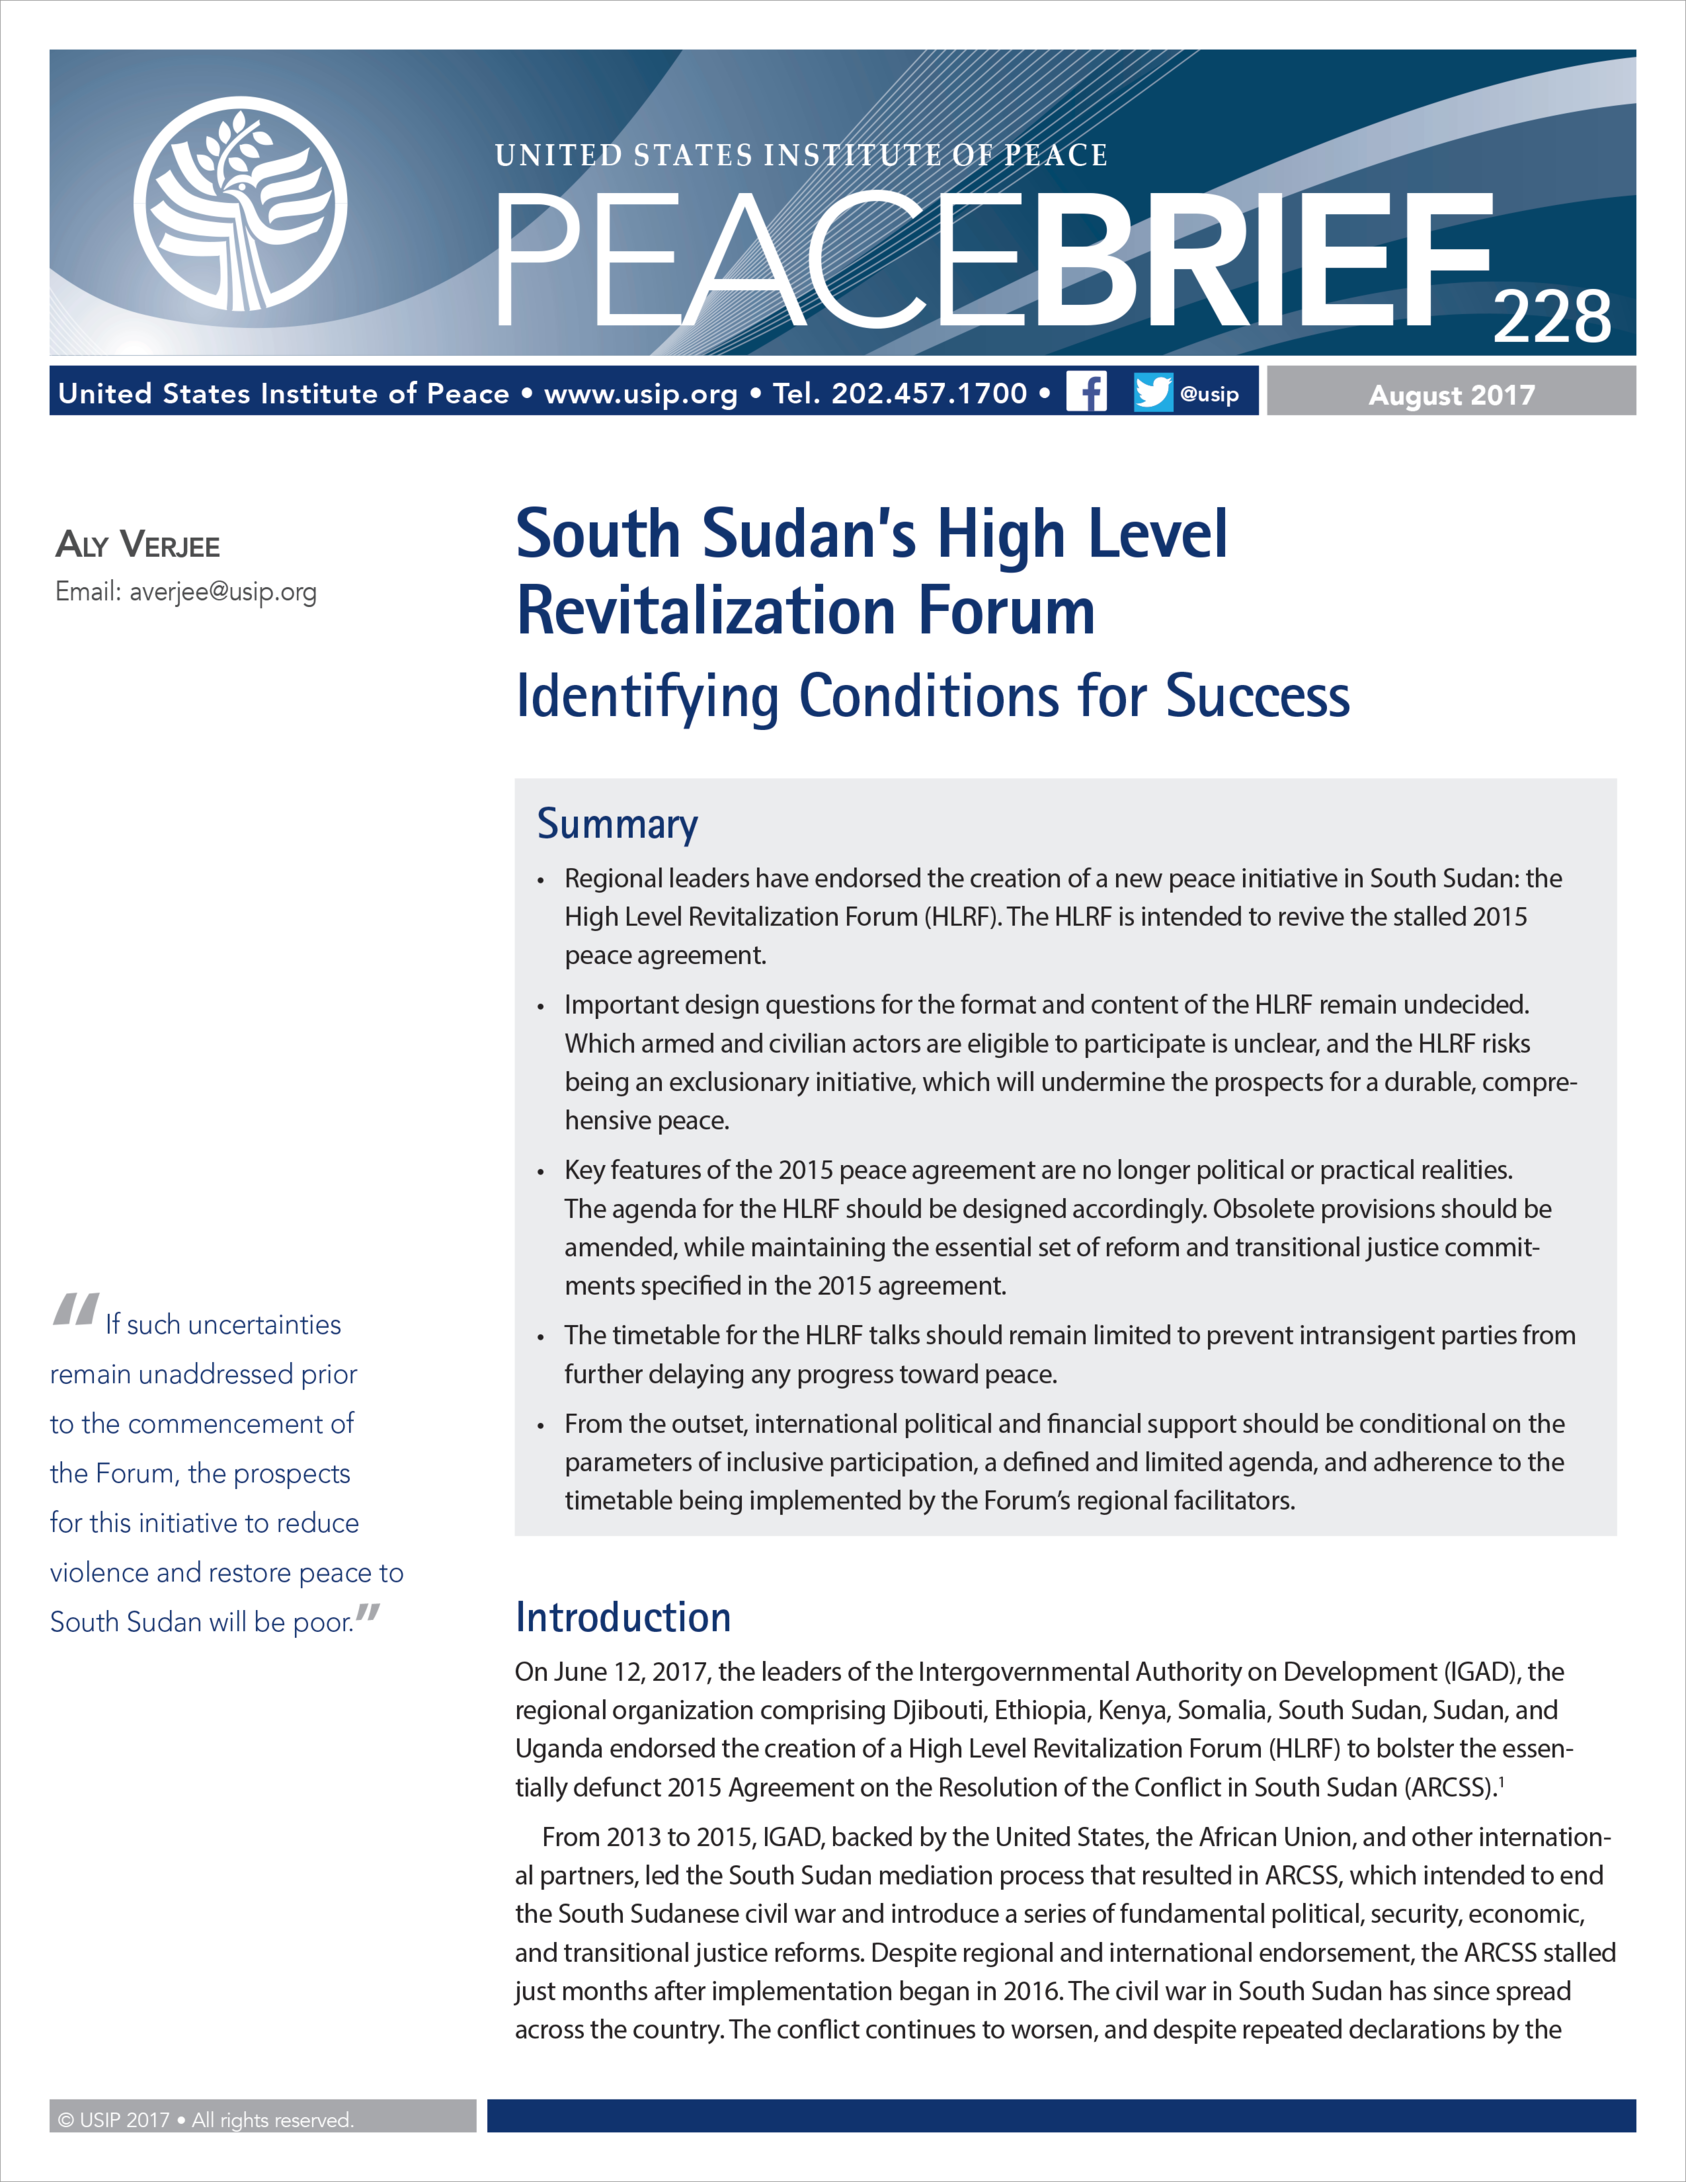 South Sudan's Level Revitalization Forum | States Institute of Peace